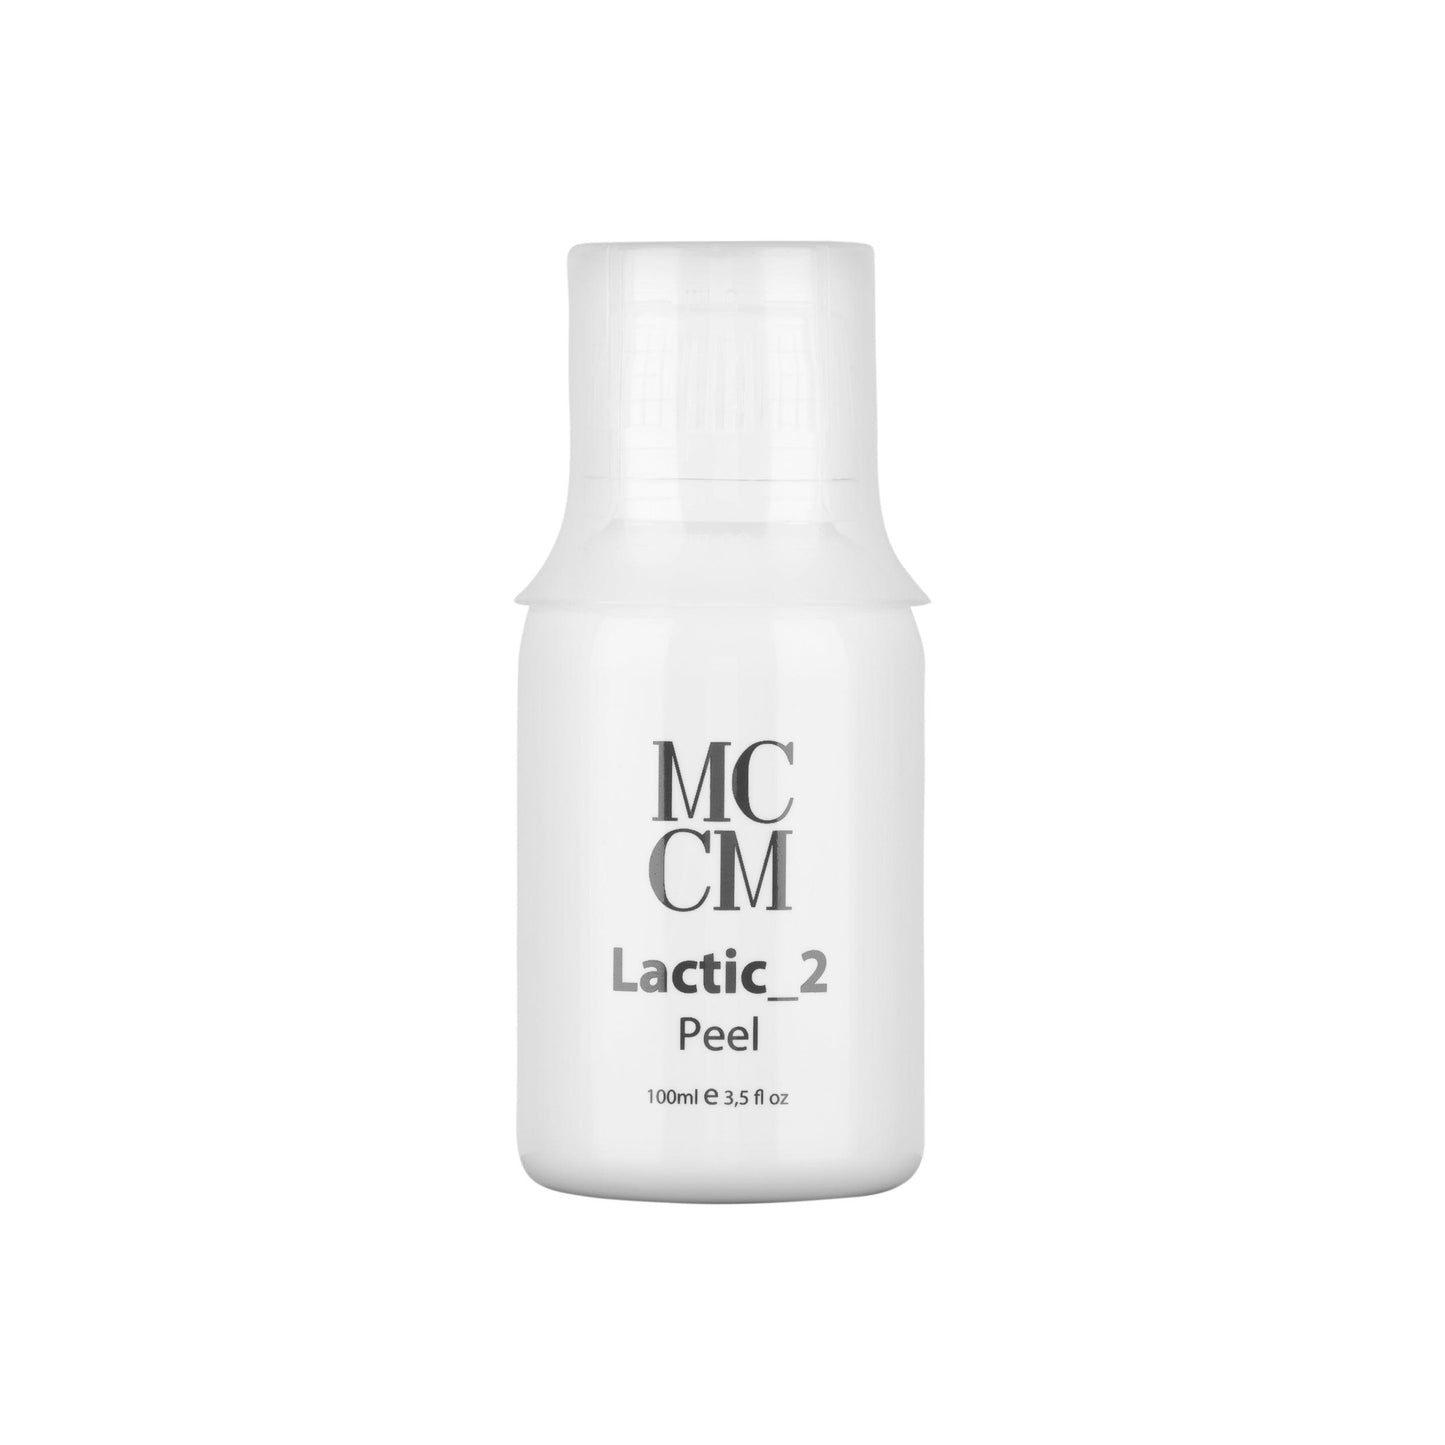 Lactic_2 Peel - MCCM Medical Cosmetics